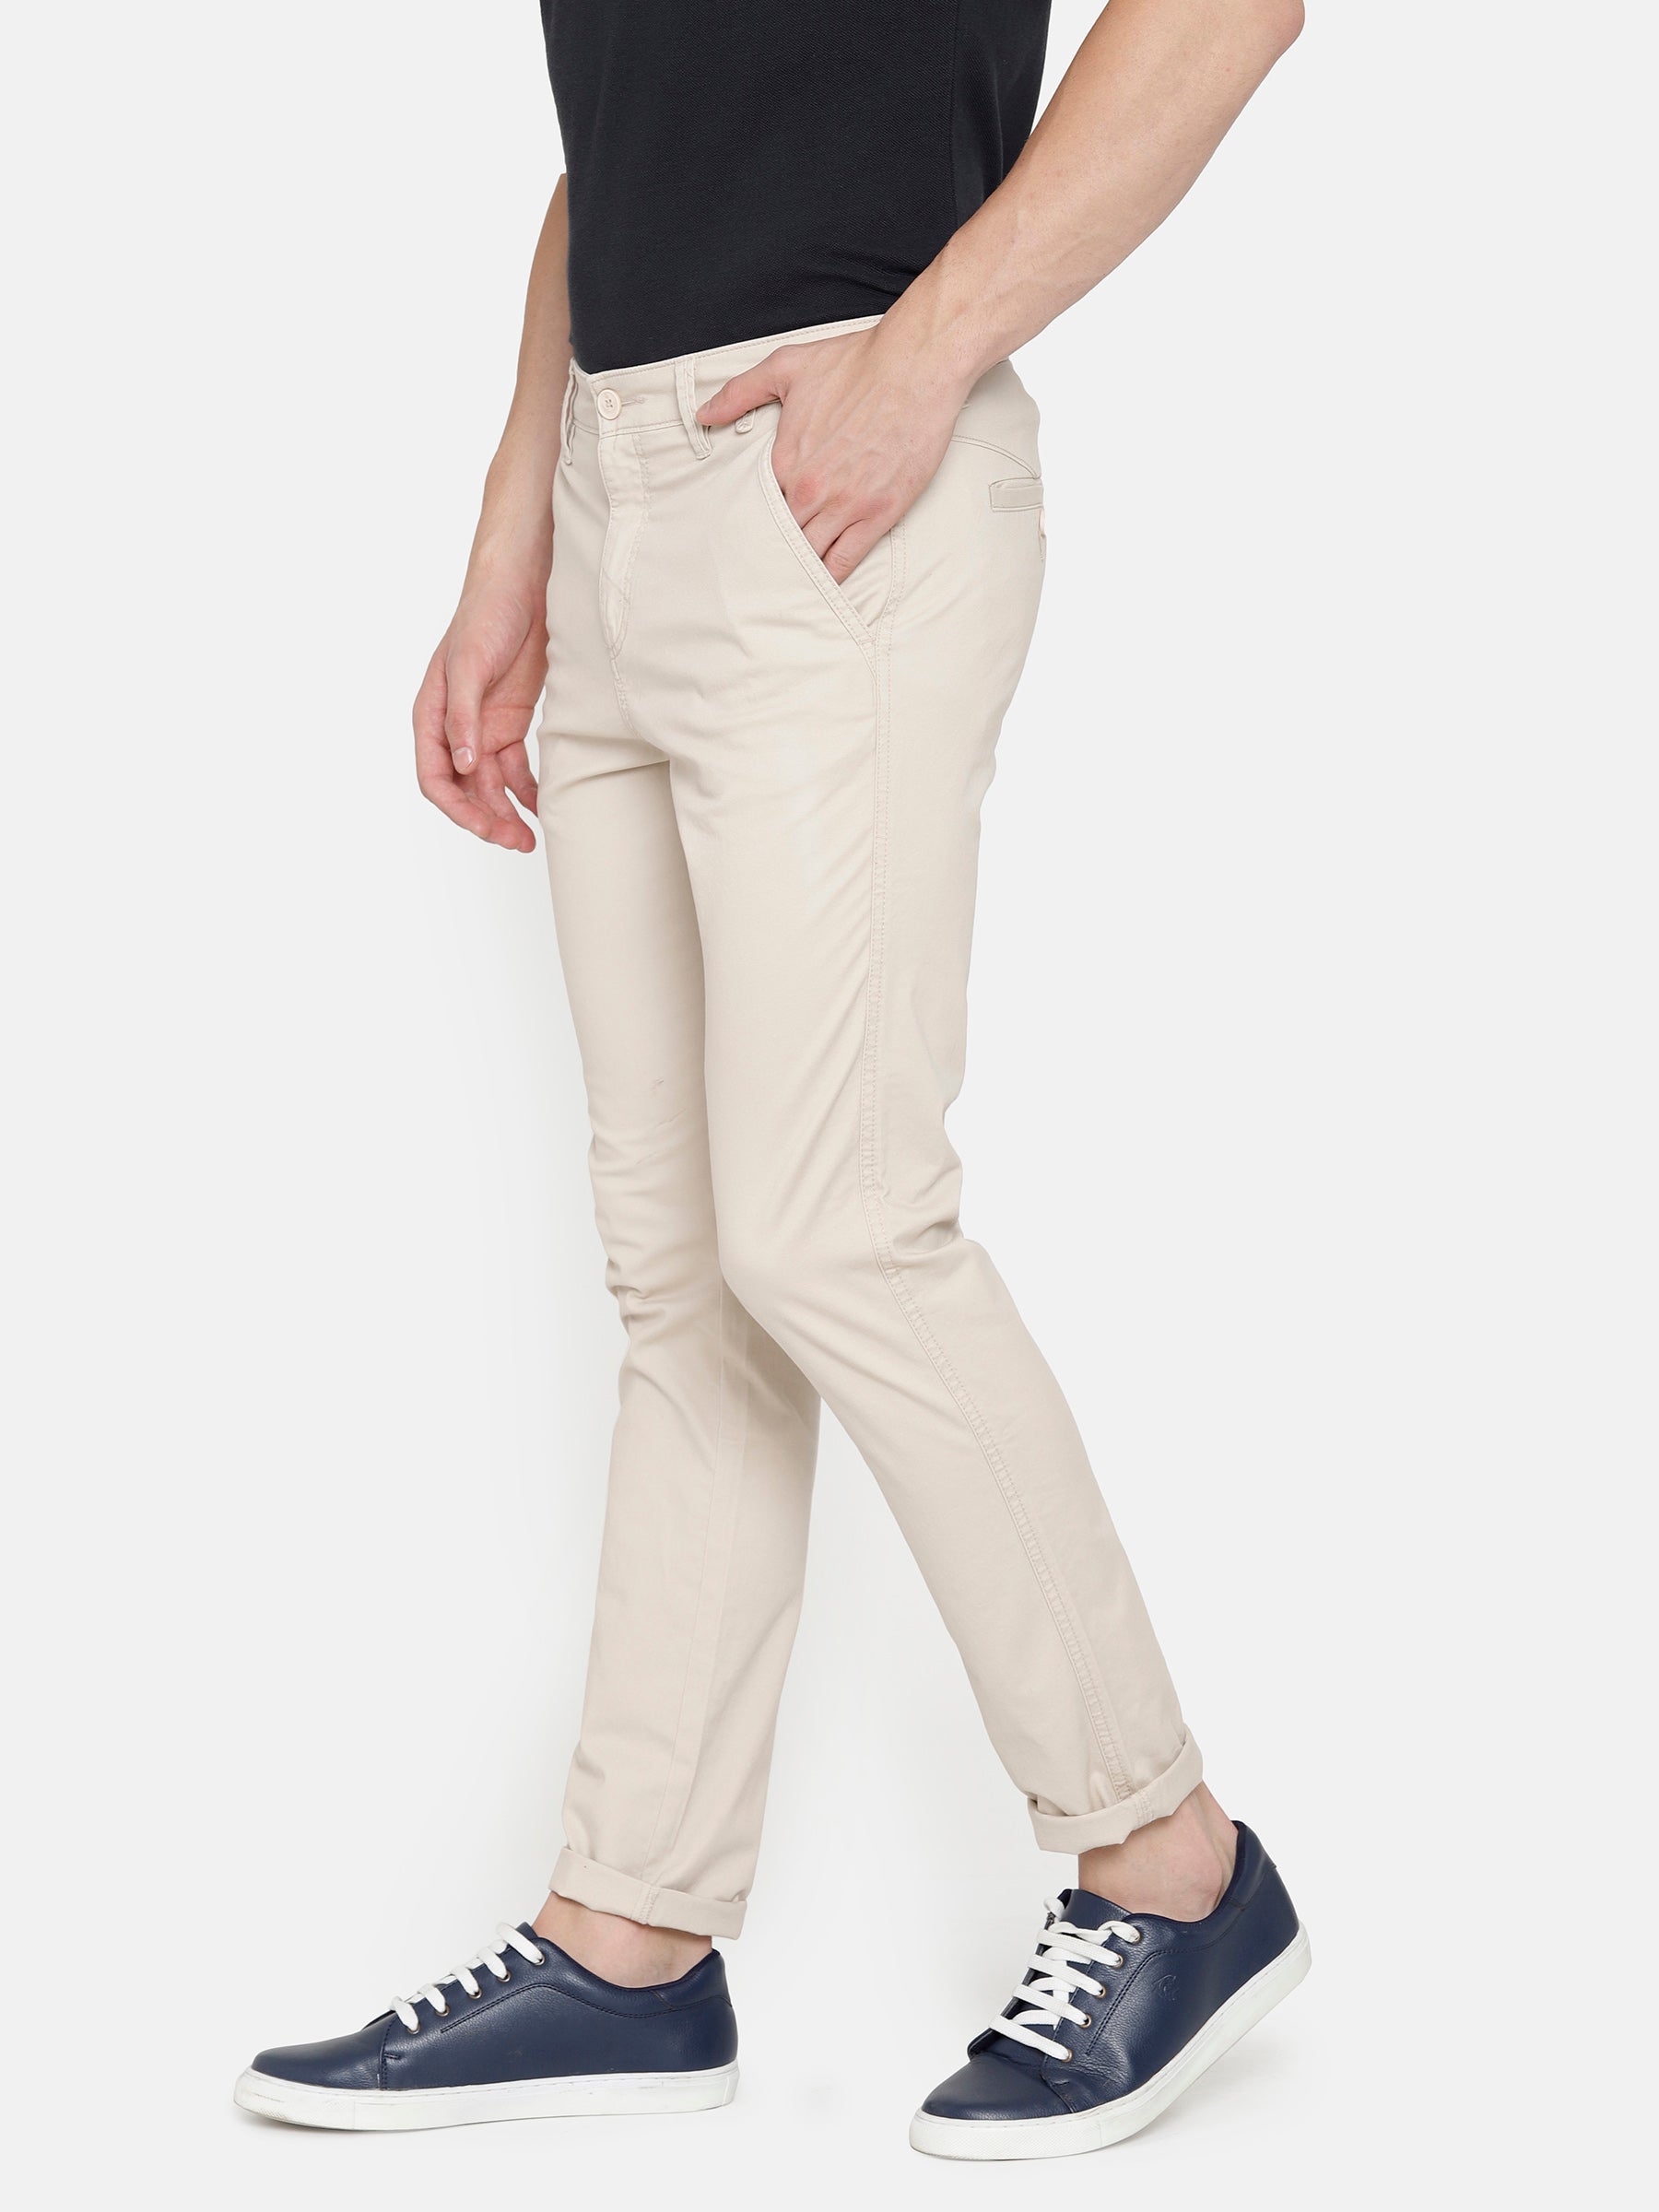 Buy SREY Cotton Light Cream Combo Slim fit Office wear Formal Trouser for  Men at Amazonin